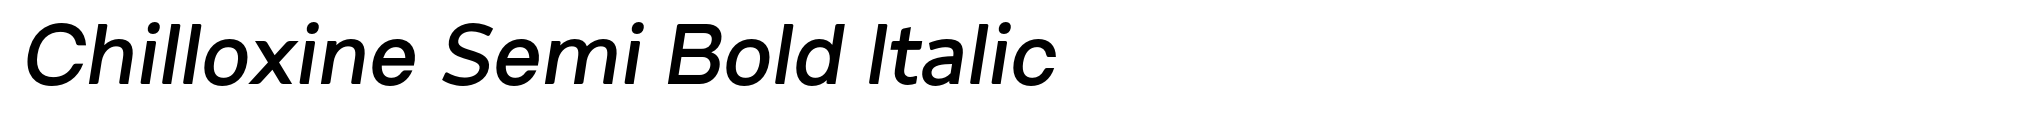 Chilloxine Semi Bold Italic image